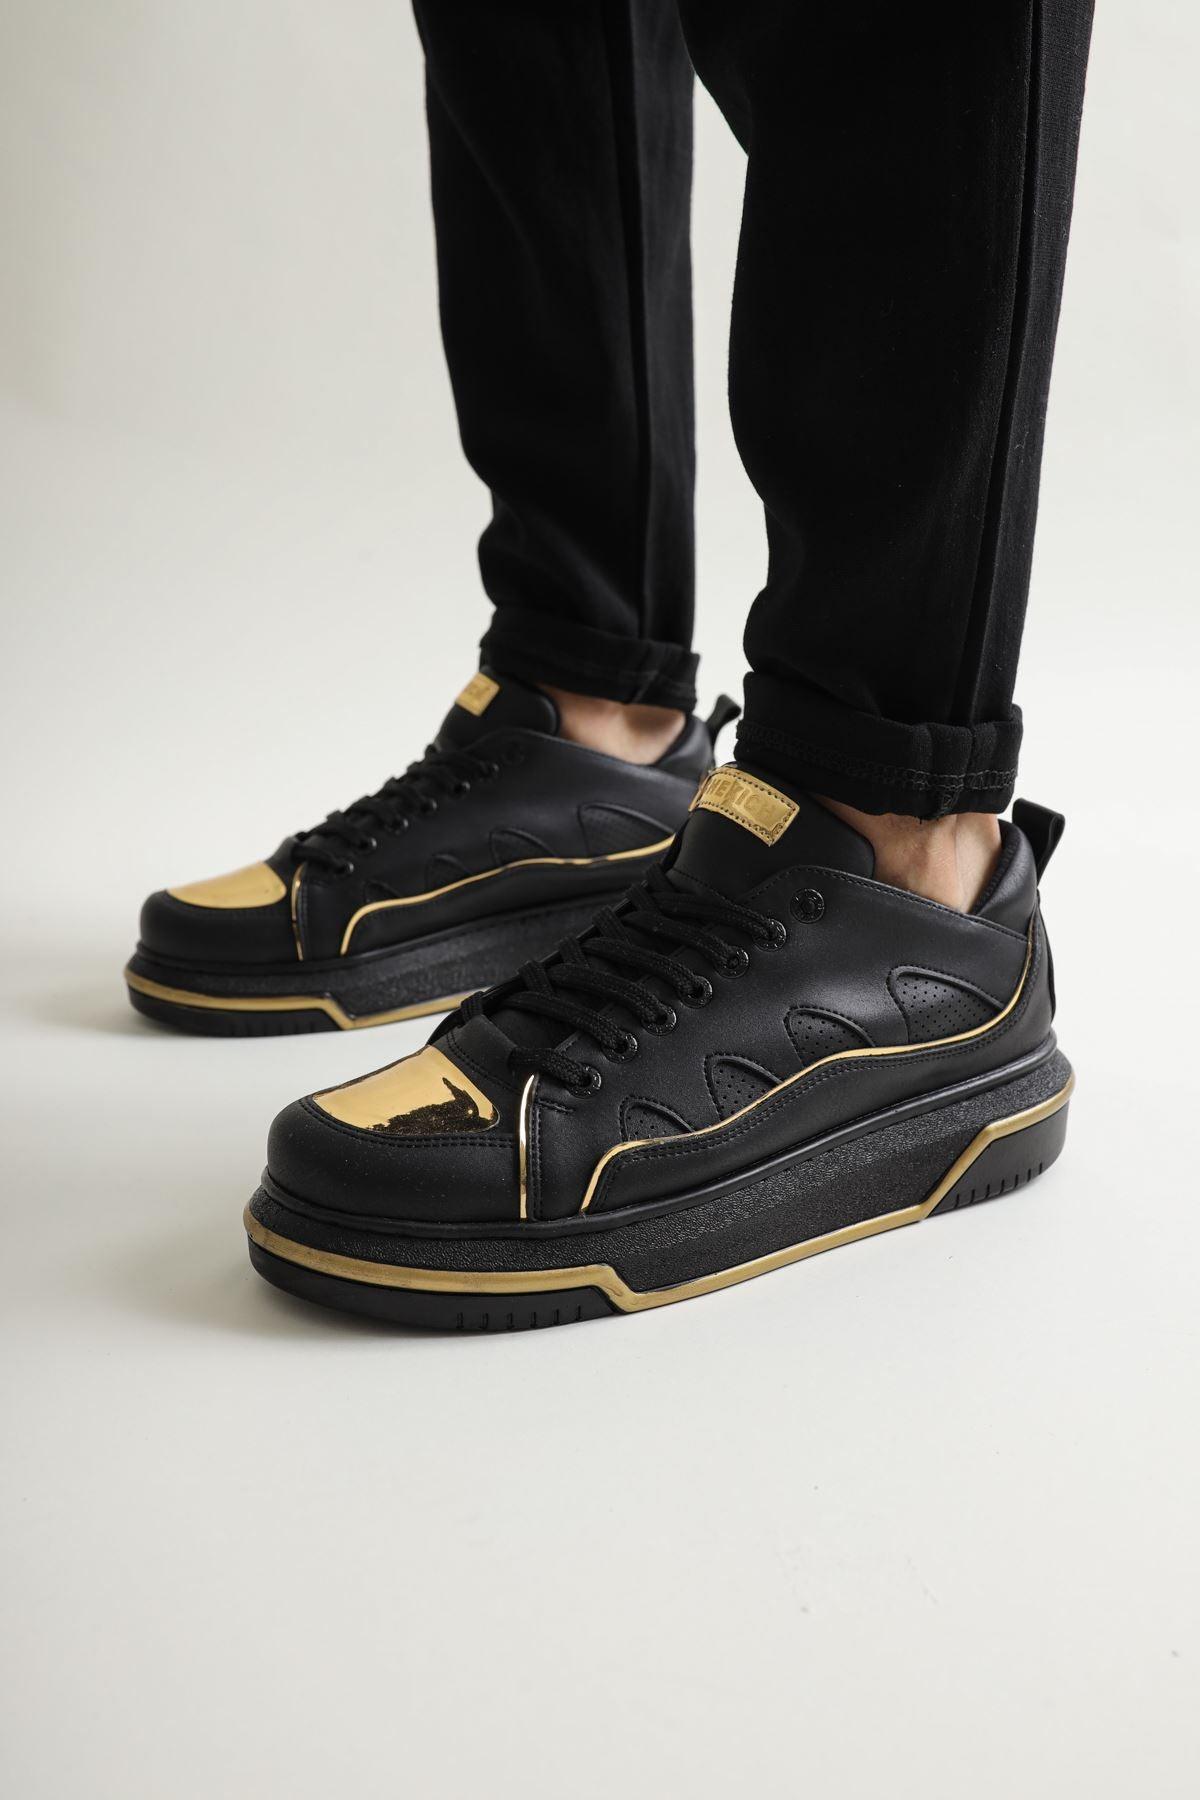 CH183 ST Men's Shoes BLACK/GOLD - STREET MODE ™